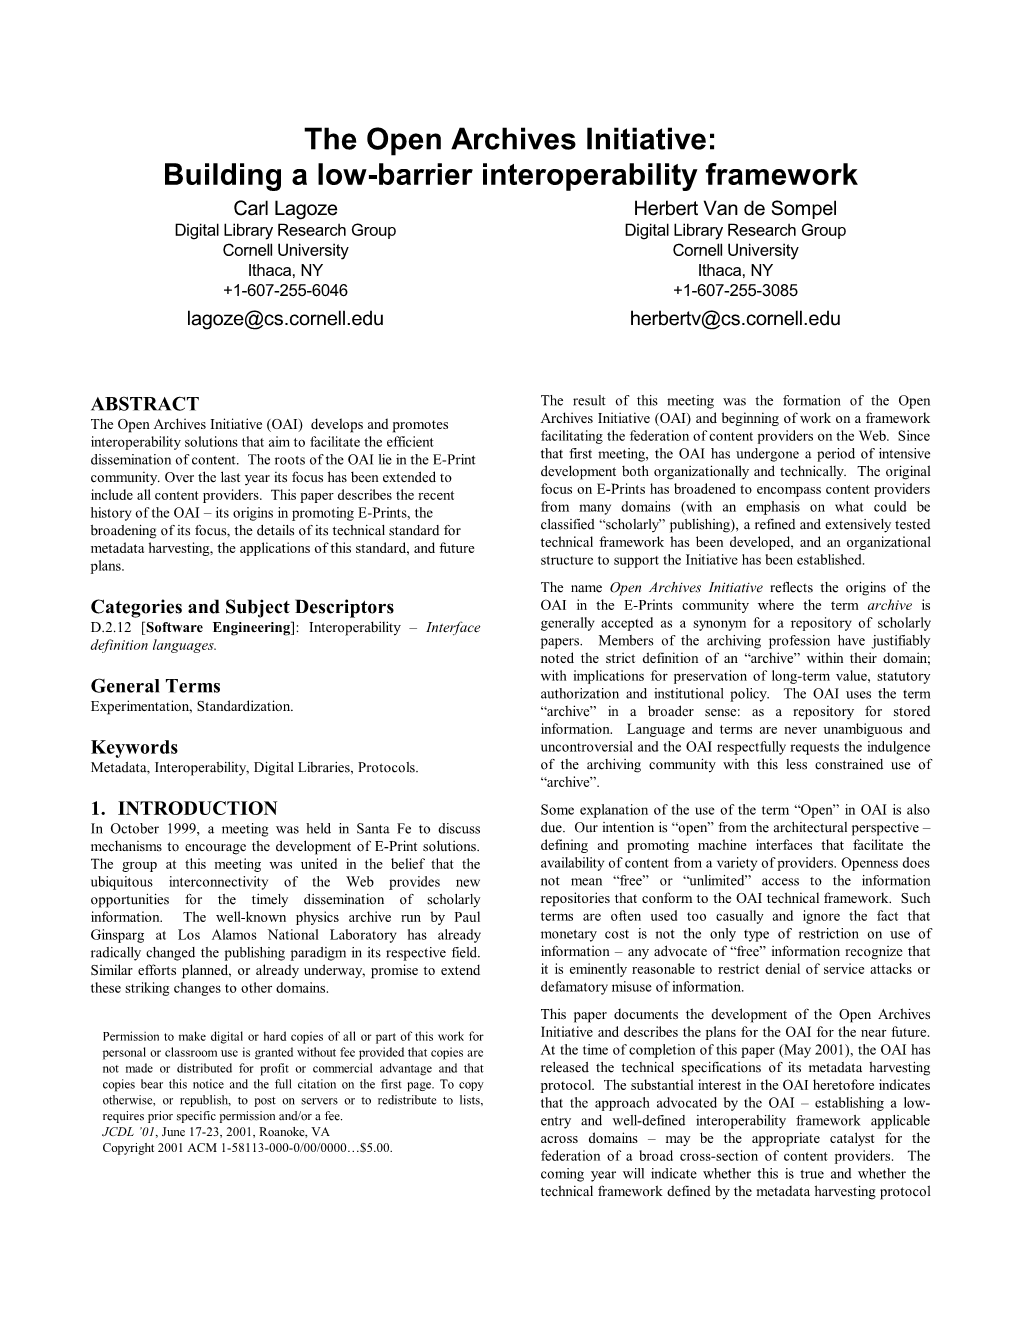 Building a Low-Barrier Interoperability Framework